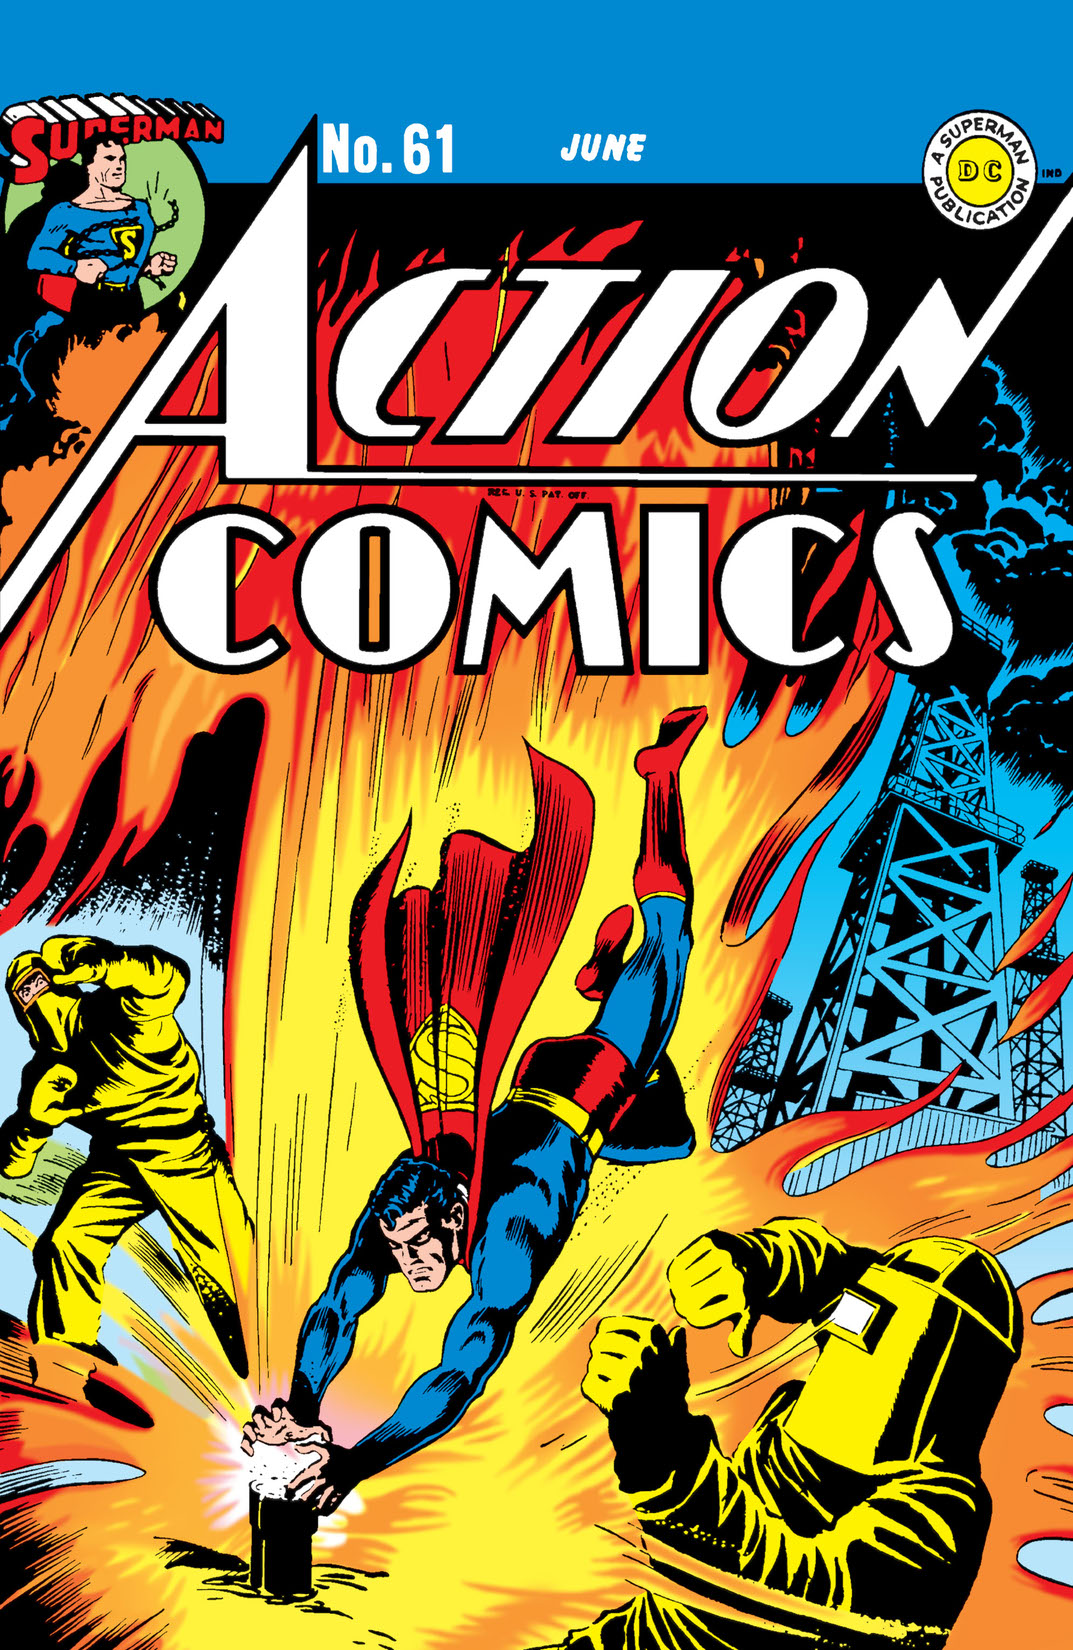 Action Comics (1938-) #61 preview images